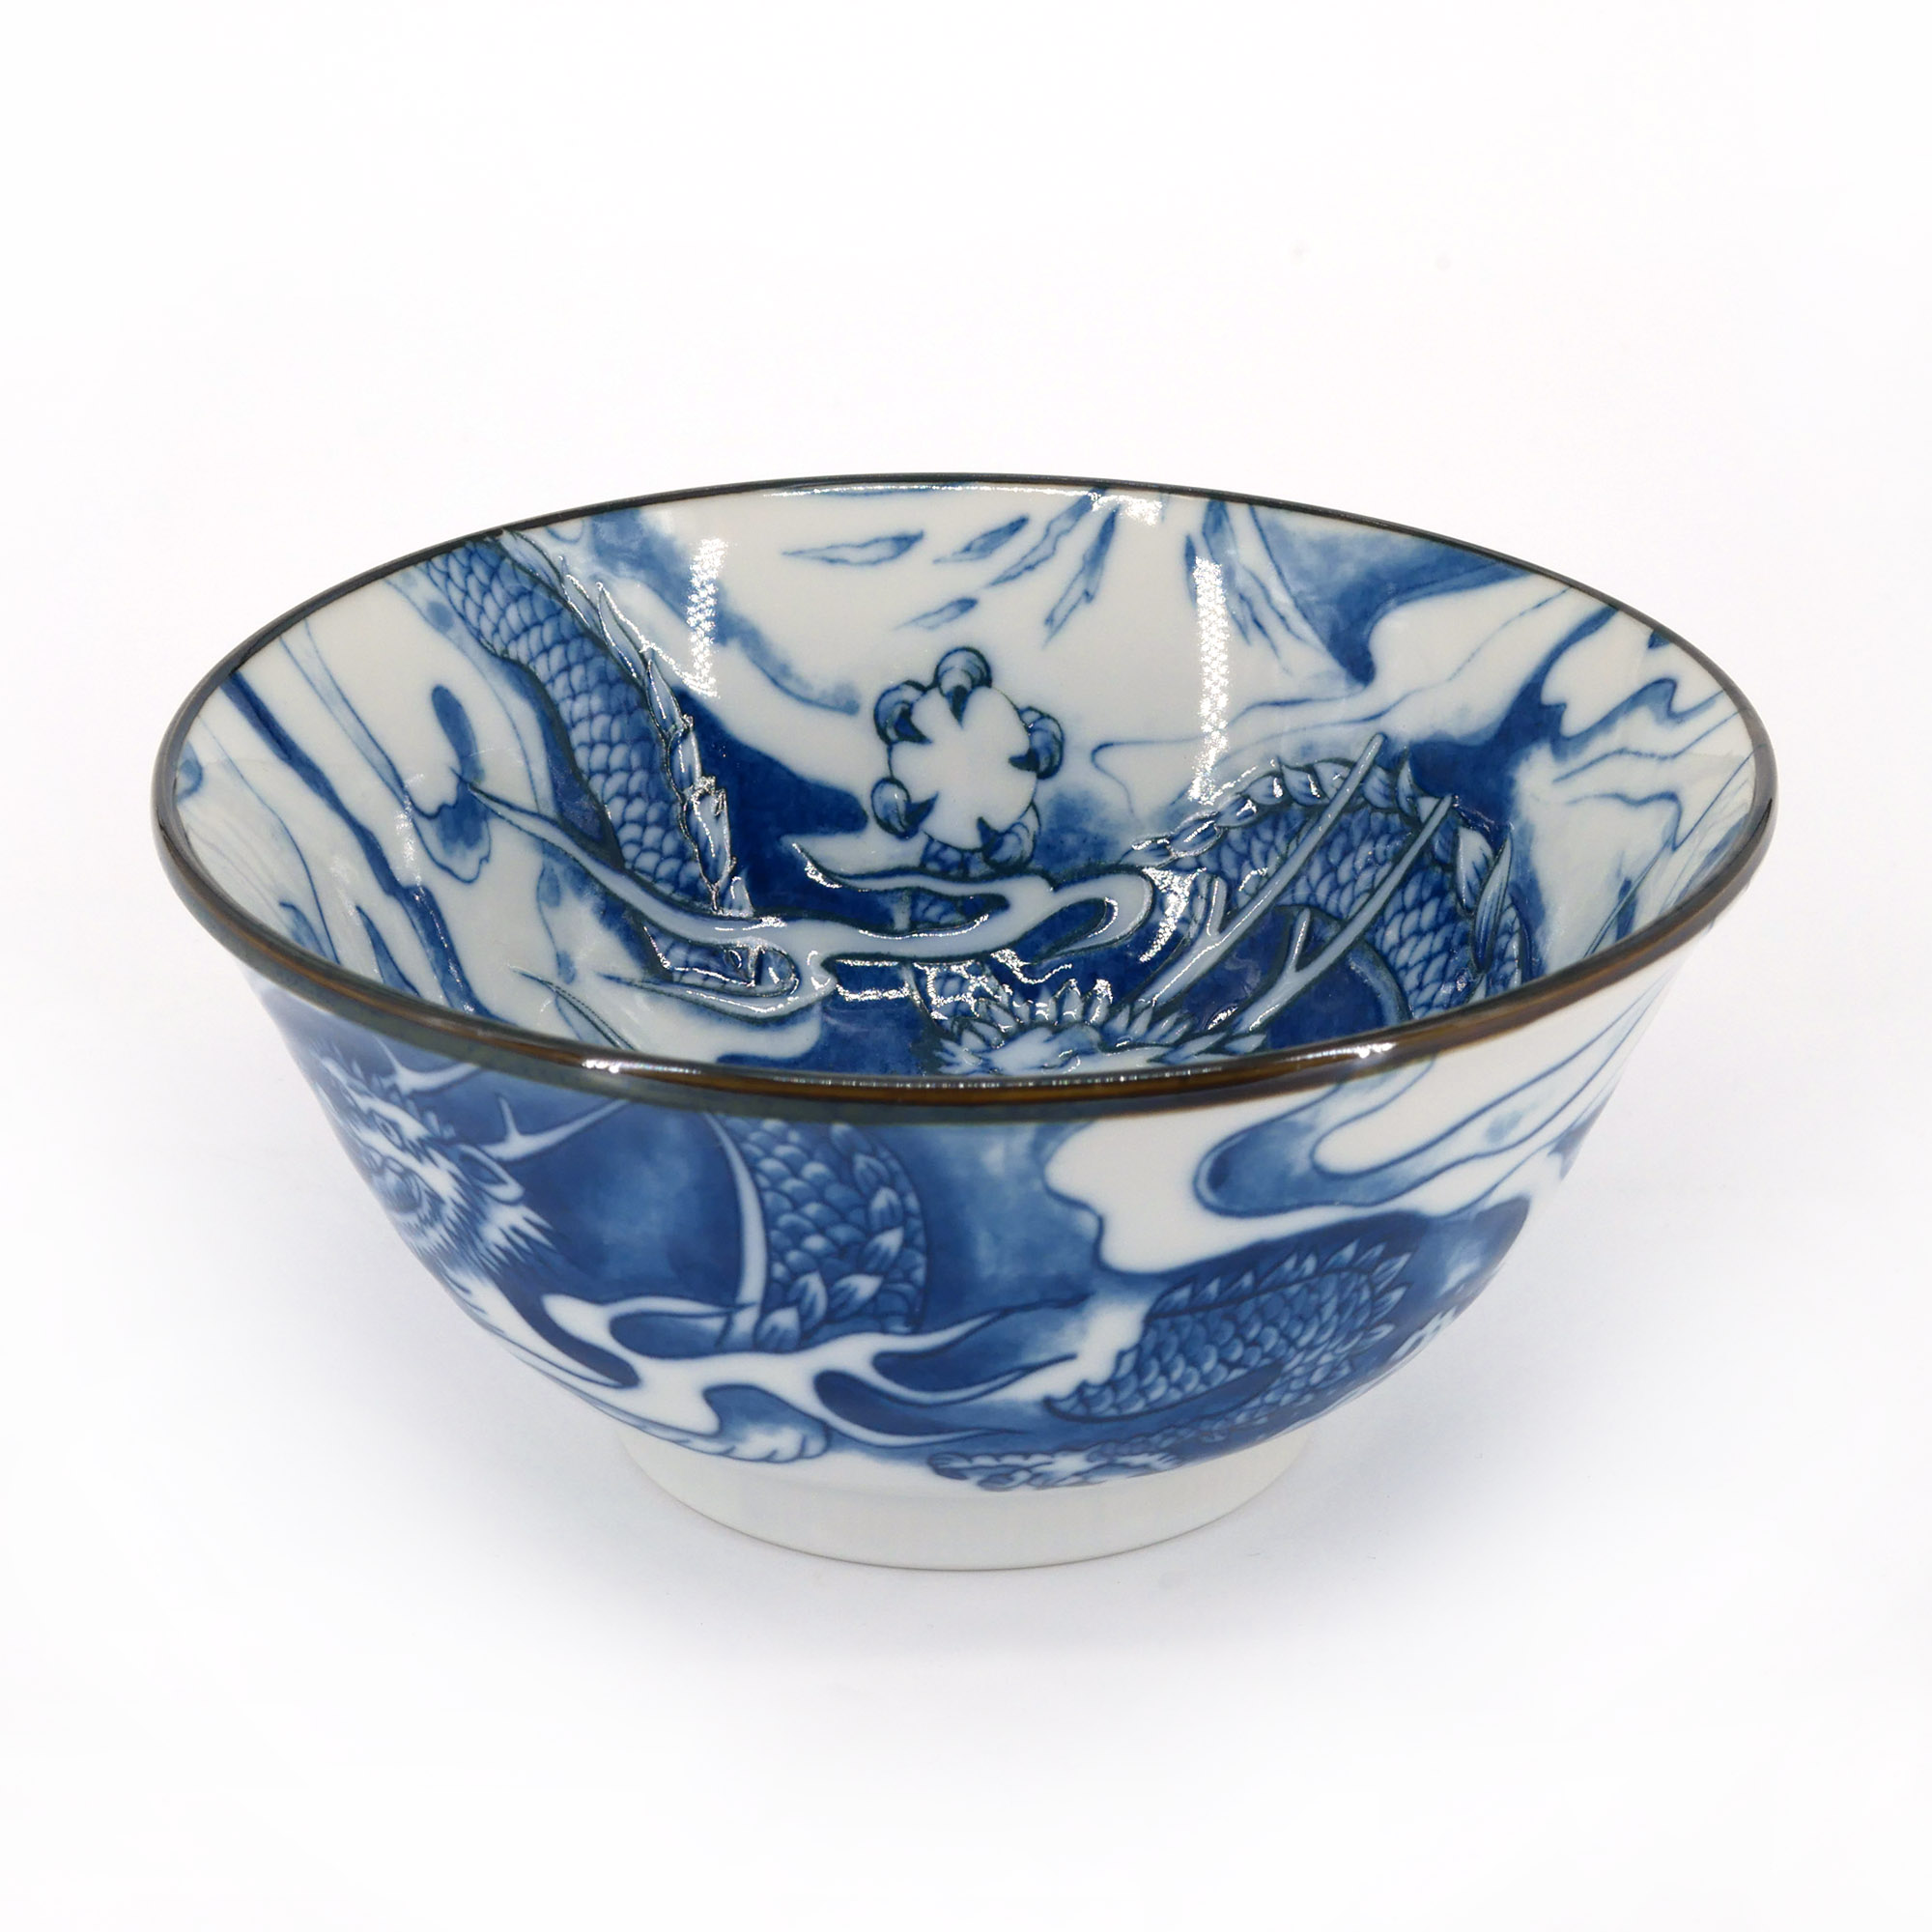 Ciotola ramen in ceramica giapponese RYU dragon, blu e bianco